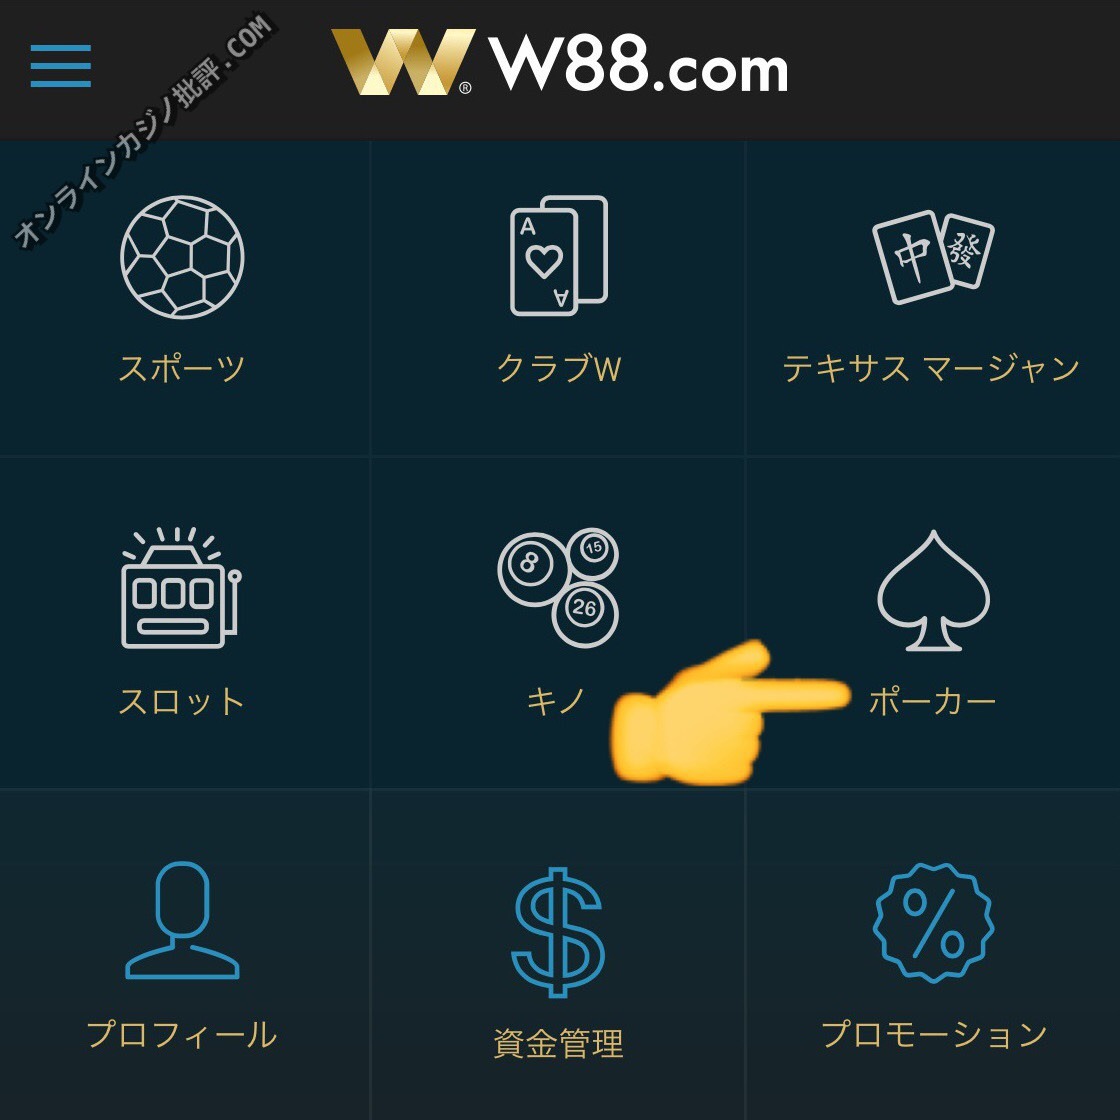 w88カジノスマートフォンアプリに信頼されてないエンタープライズと表示される場合の対処画面